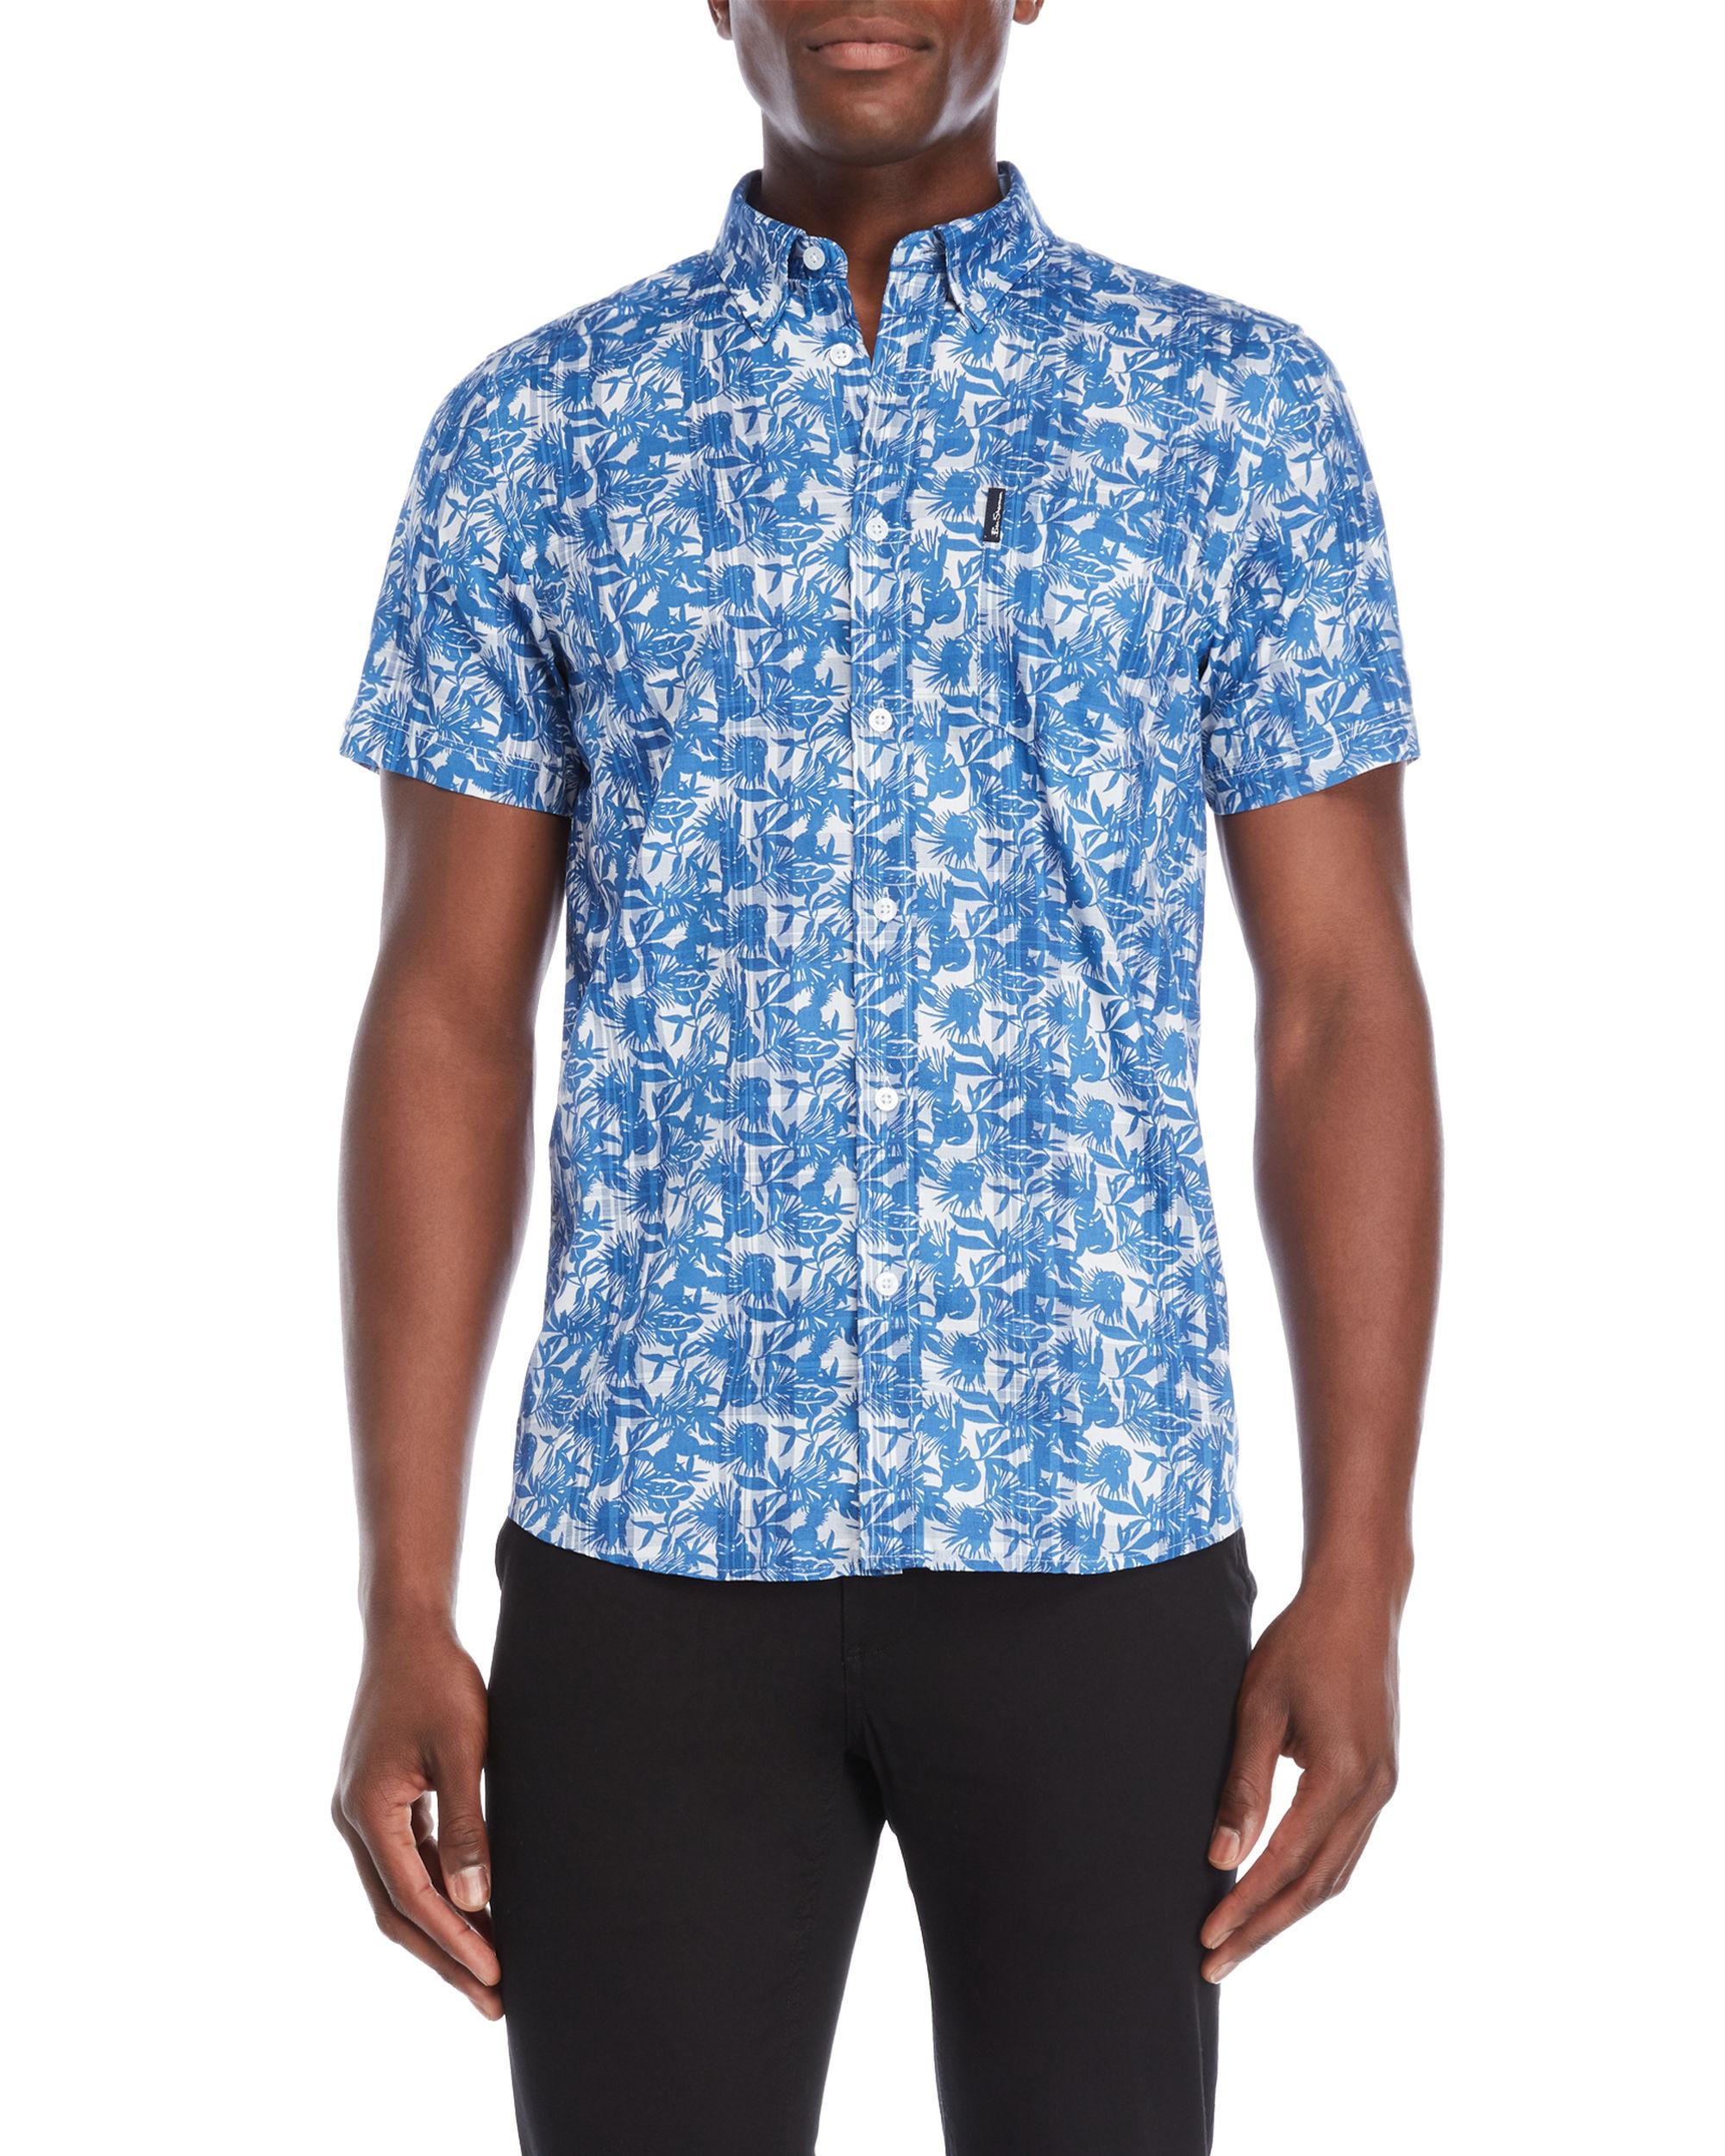 Ben Sherman Blue Tropical Button-down Shirt in Blue for Men - Lyst